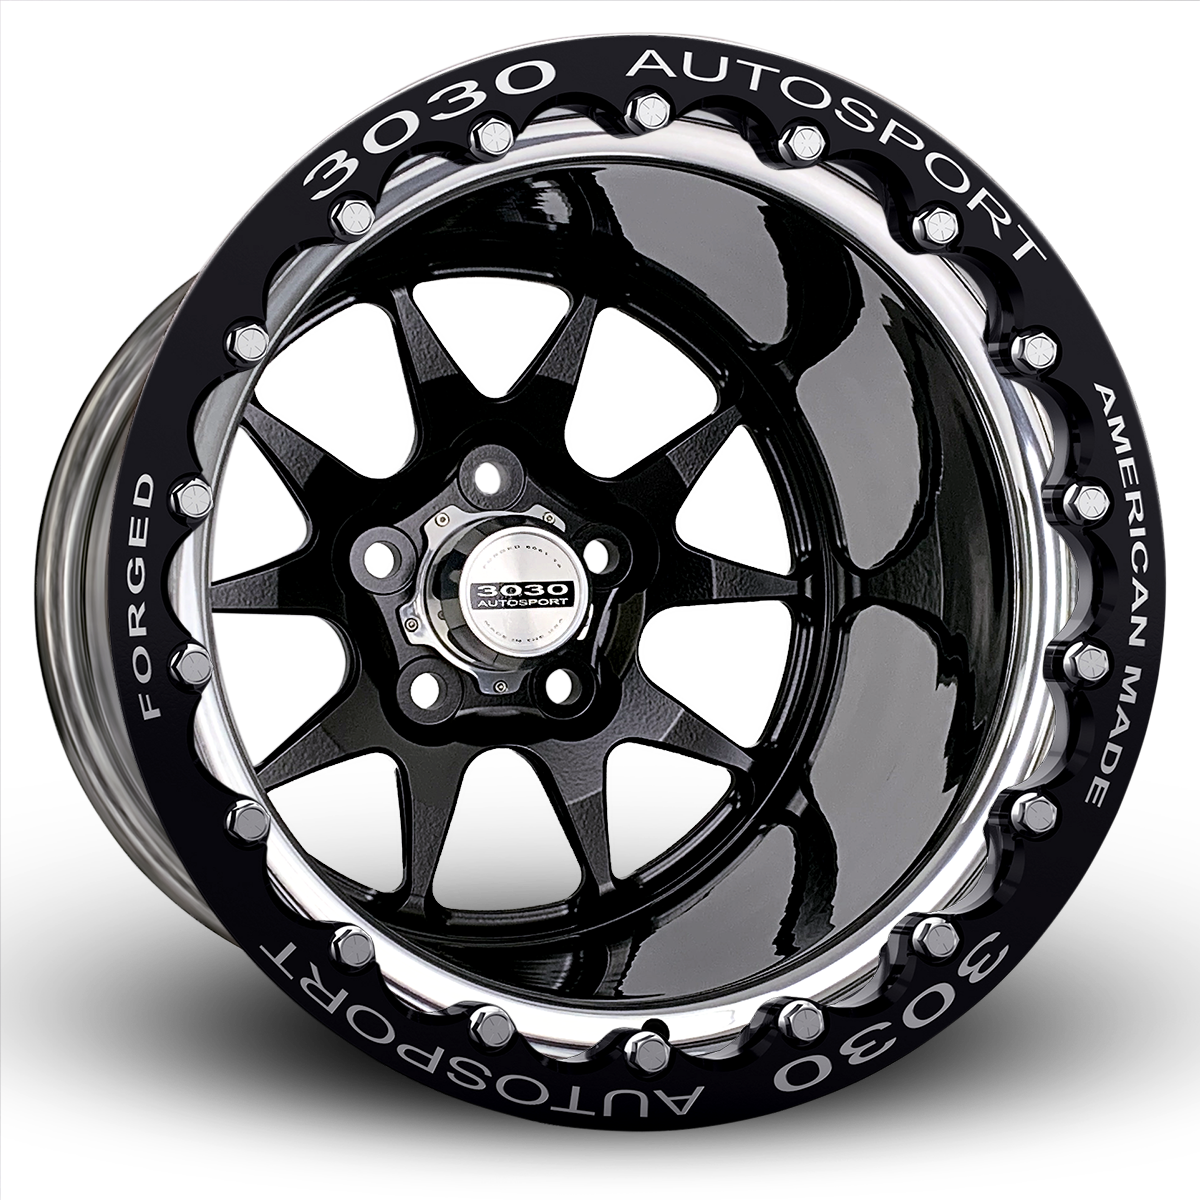 MACH-10 Double-Beadlock Wheel, Size: 15x12", Bolt Pattern: 5x4.5", Backspace: 4.500" [Black/Polished]